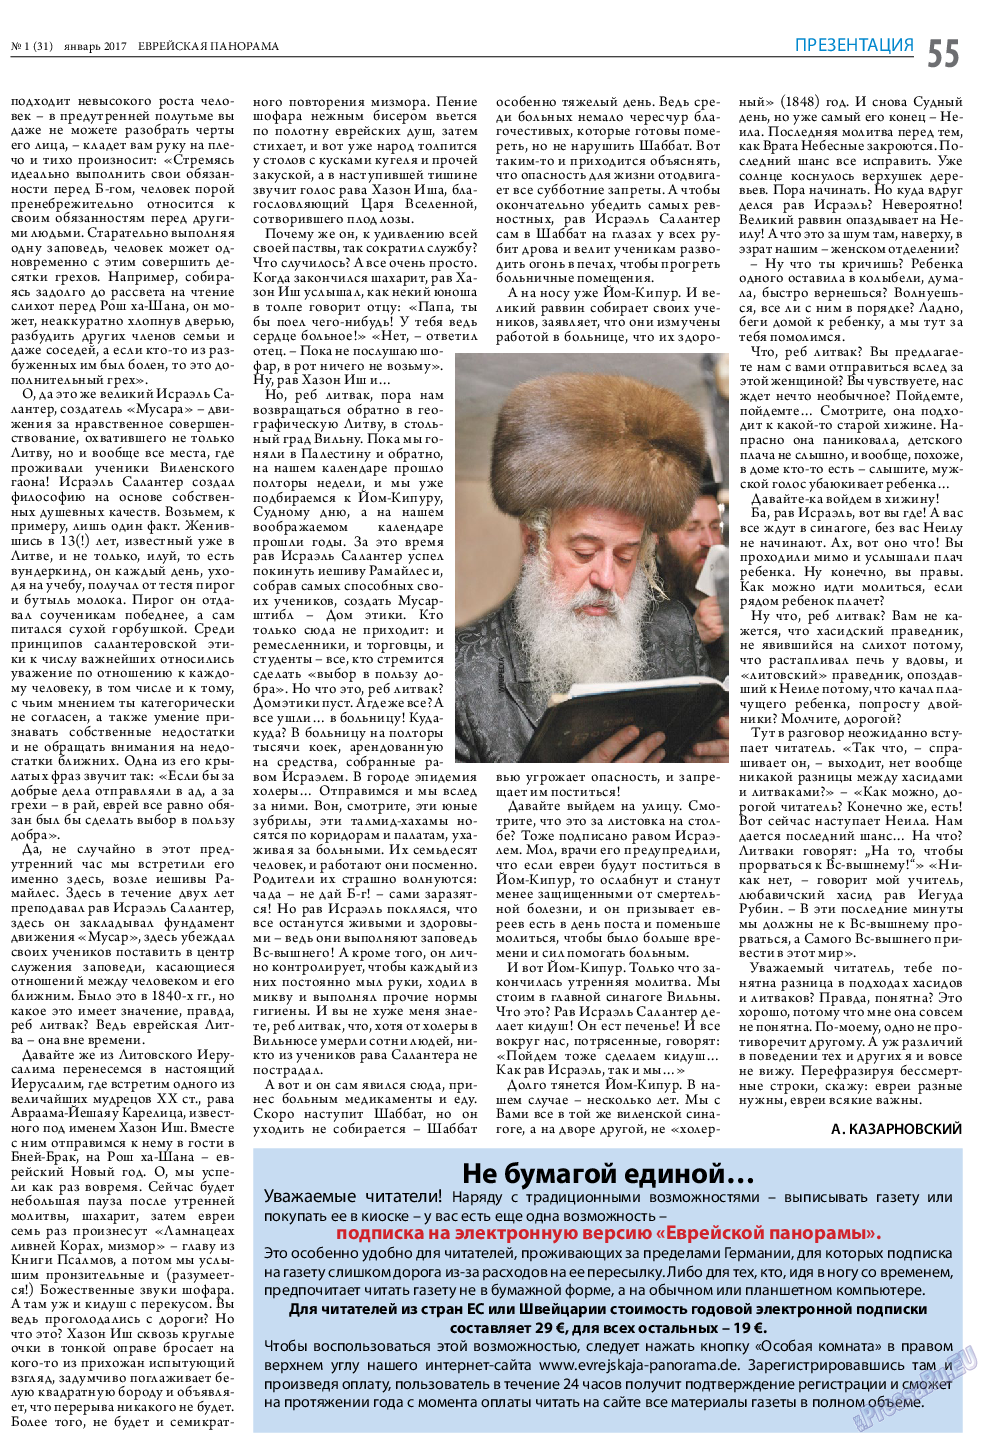 Еврейская панорама, газета. 2017 №1 стр.55